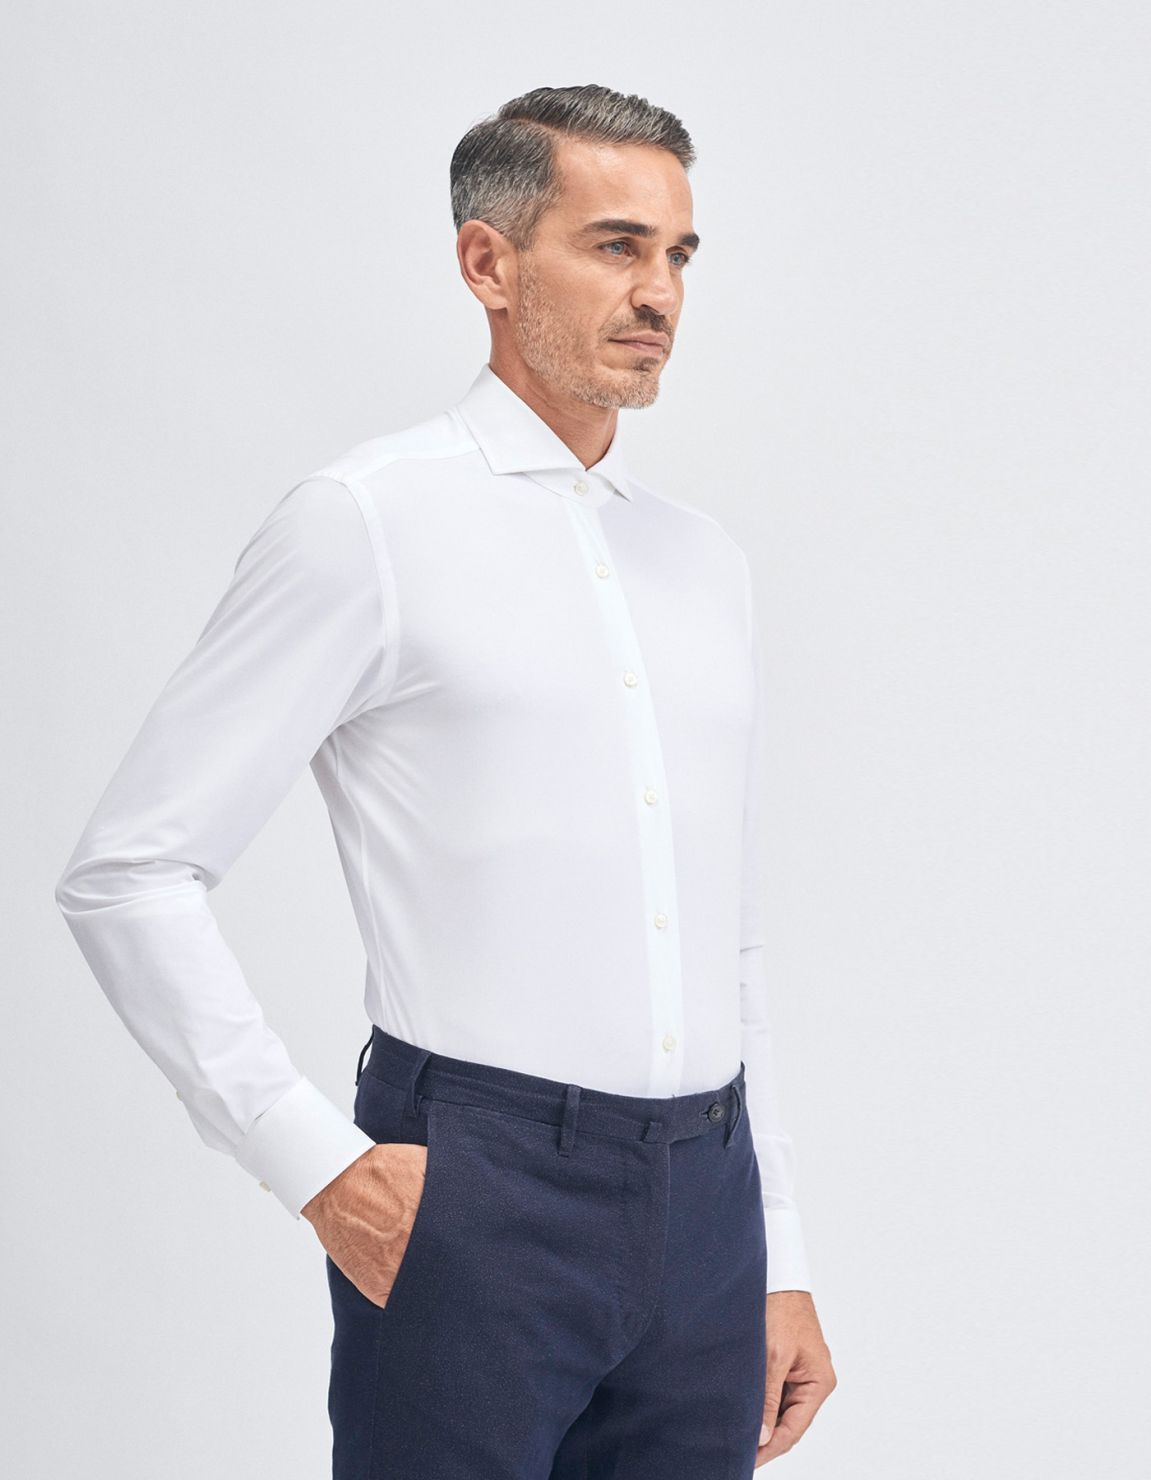 Shirt Collar cutaway White Twill Tailor Custom Fit 1